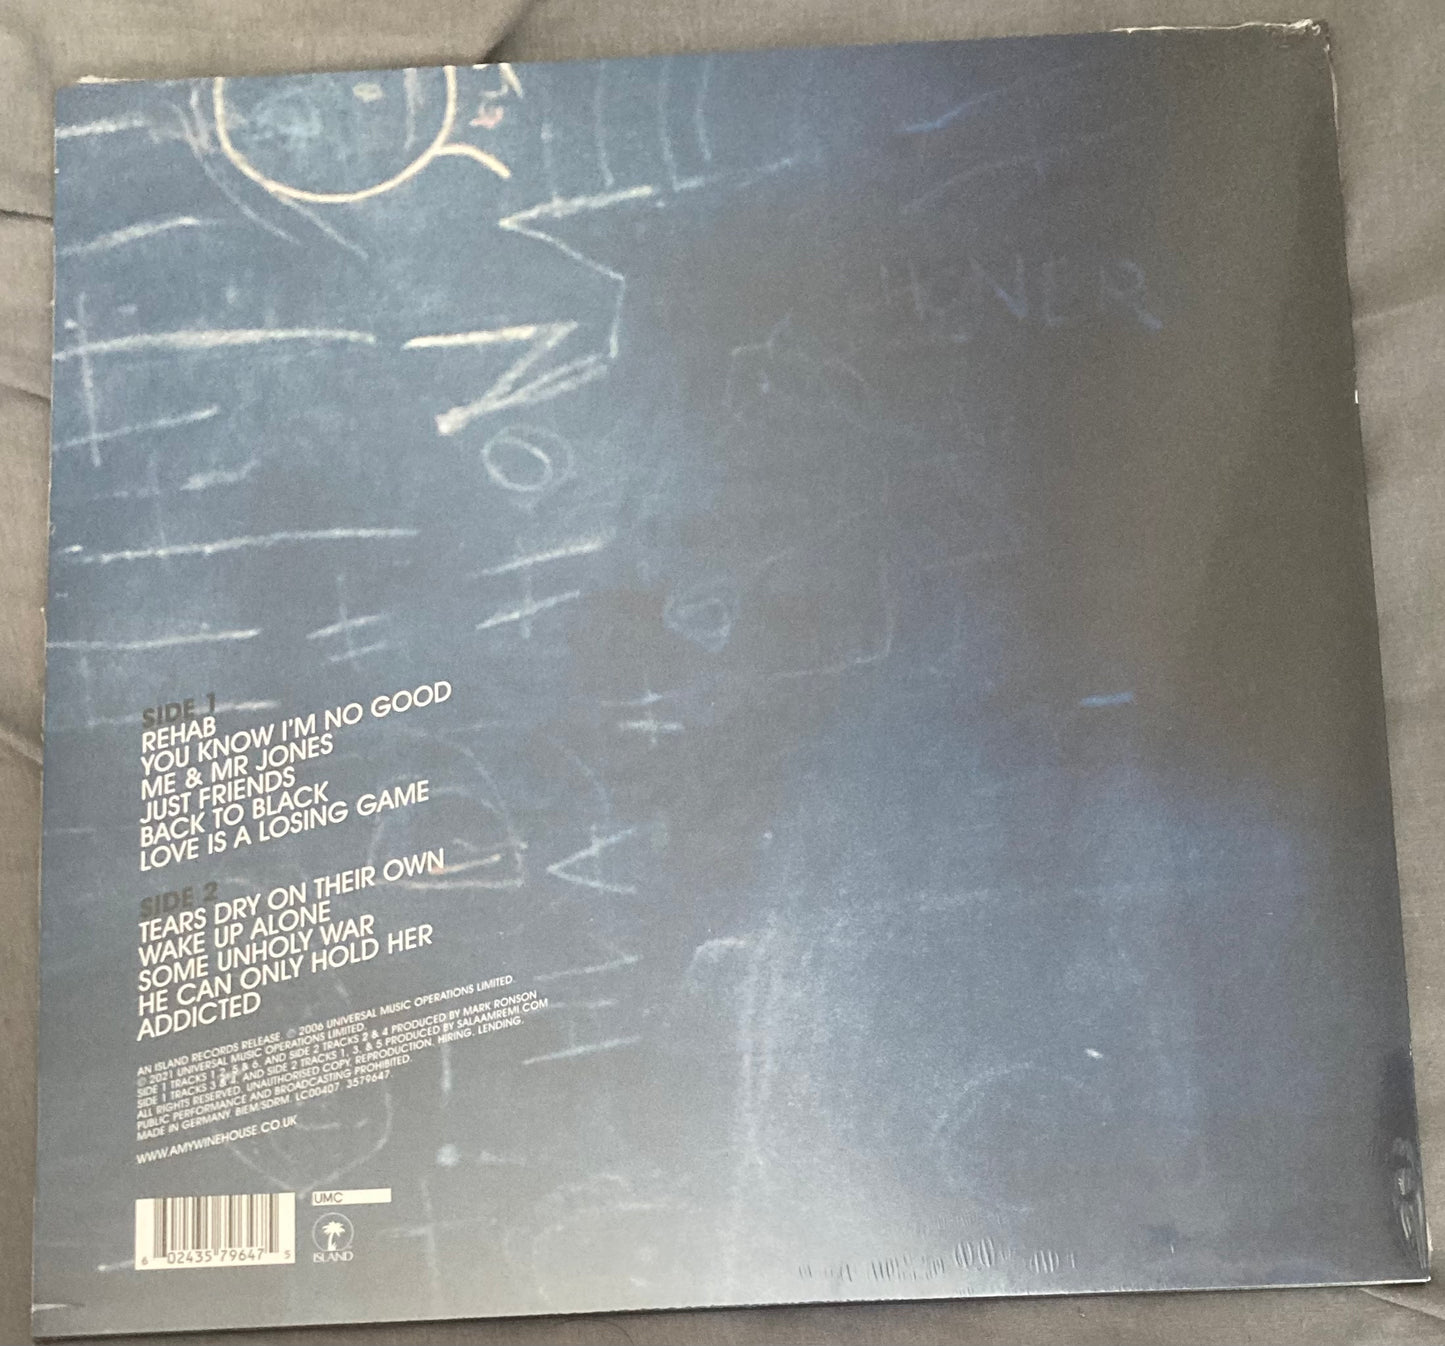 The back of 'Amy Winehouse - Back to Black' on vinyl